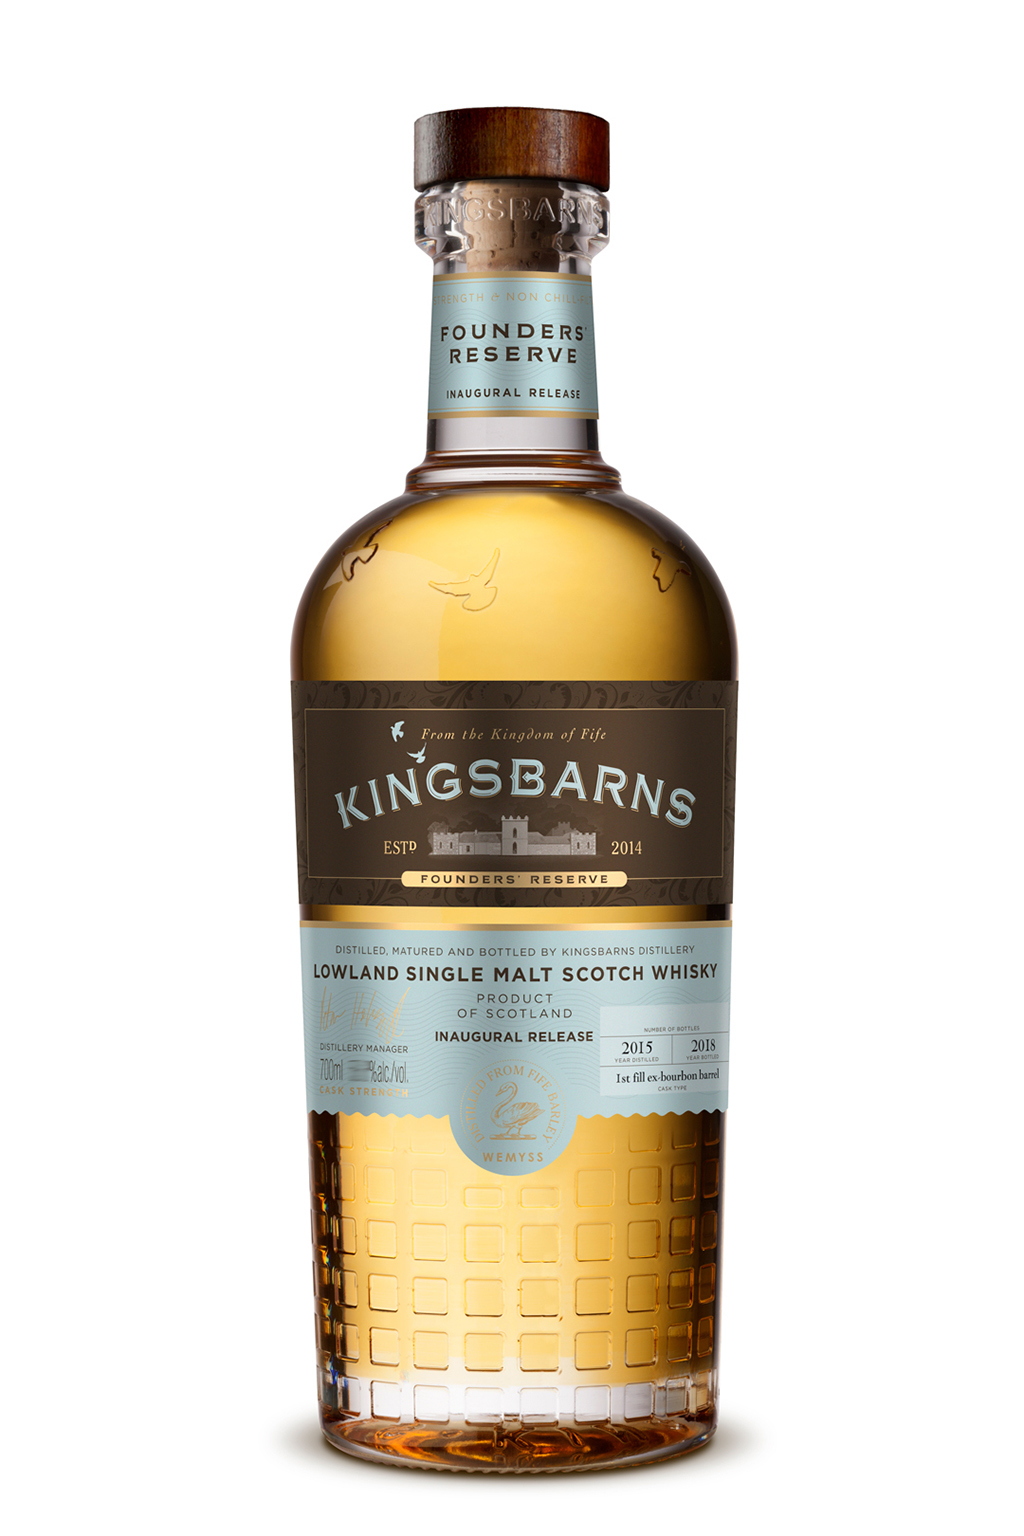 The Kingsbarns Distillery Founders’ Reserve Inaugural Release